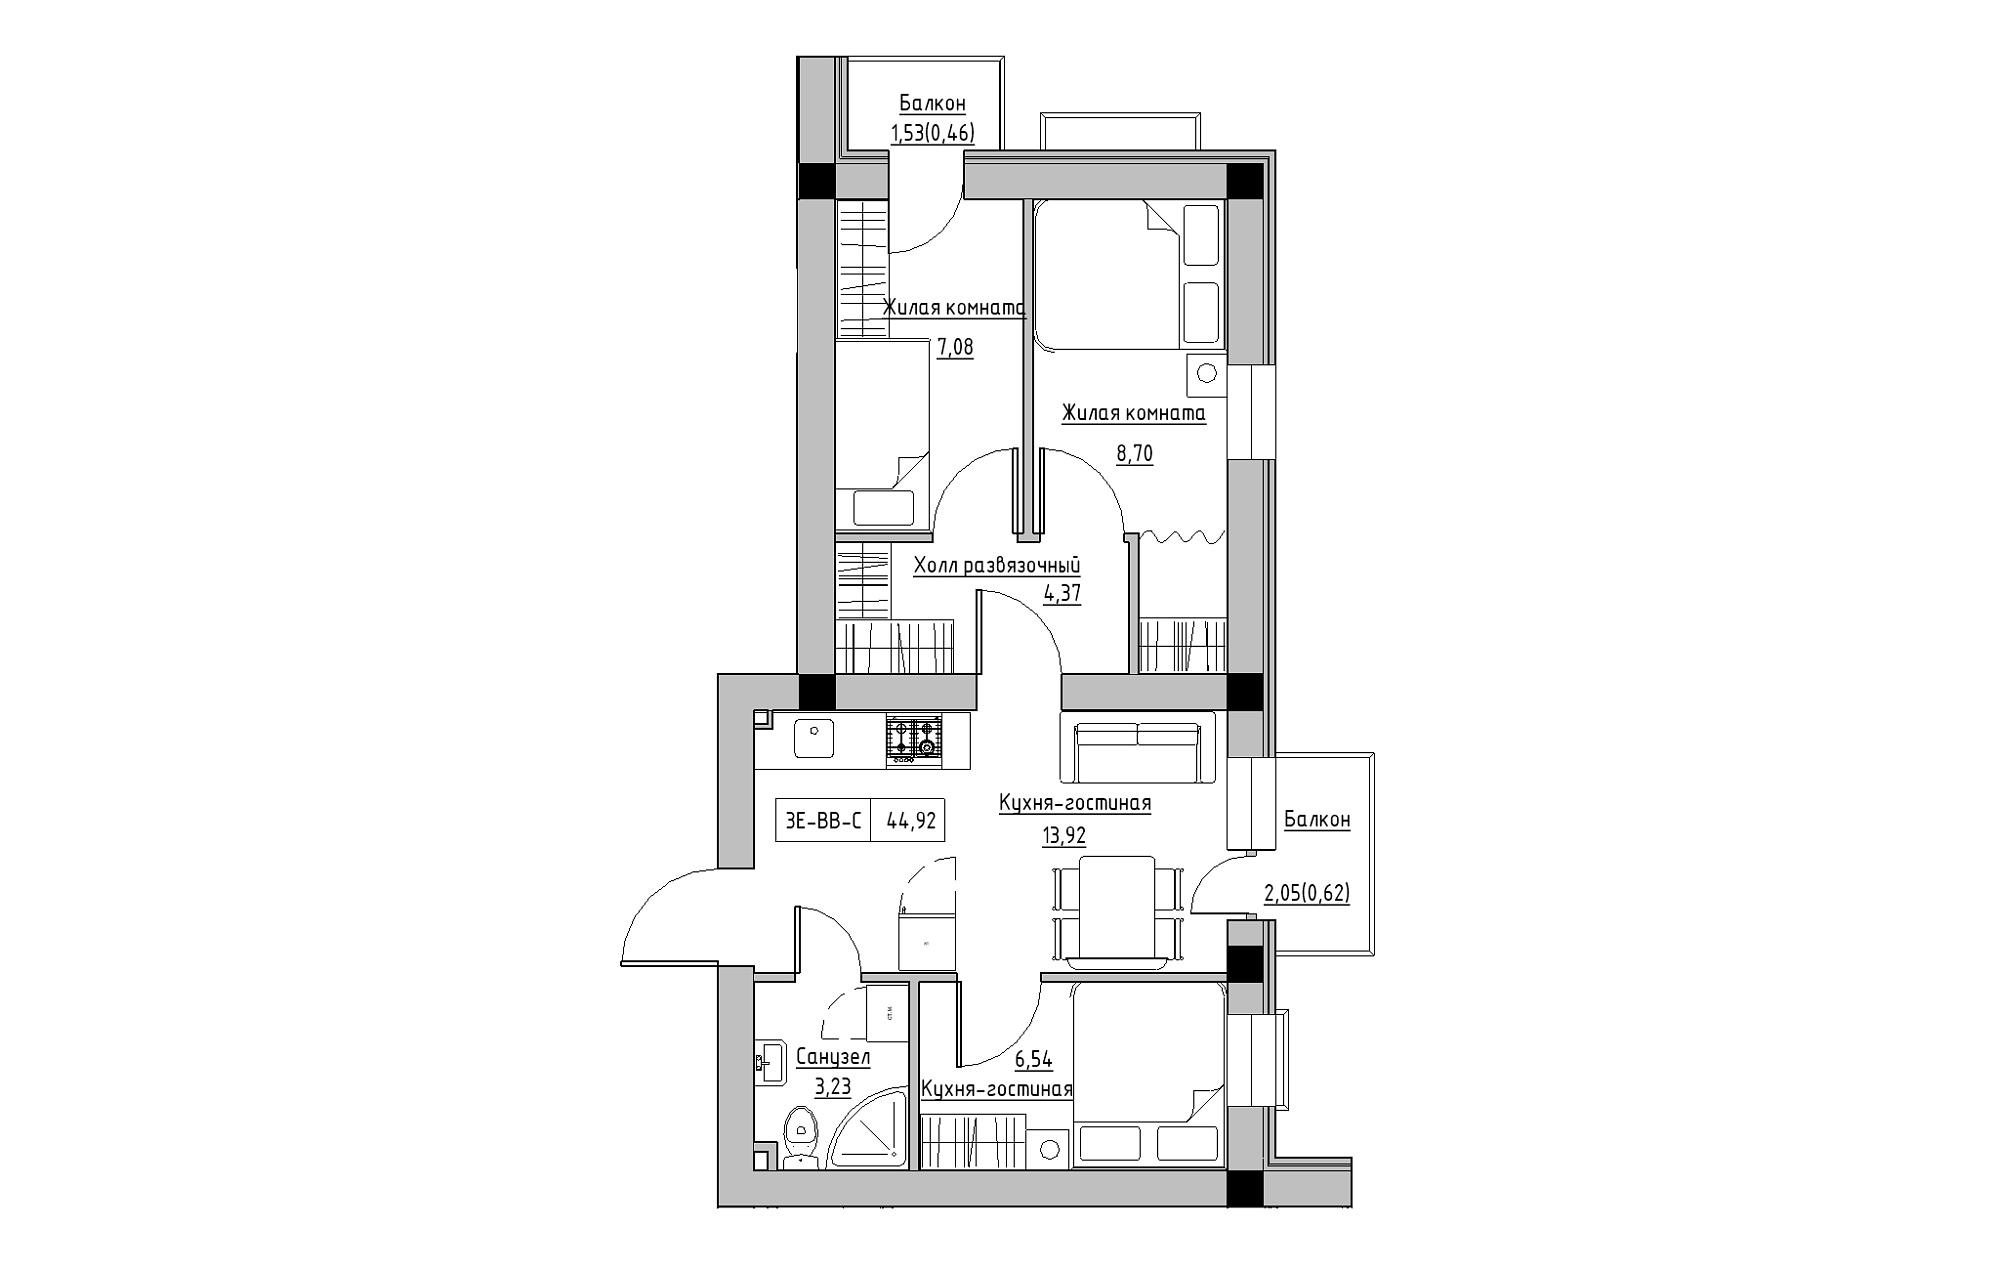 Planning 3-rm flats area 44.92m2, KS-018-05/0011.